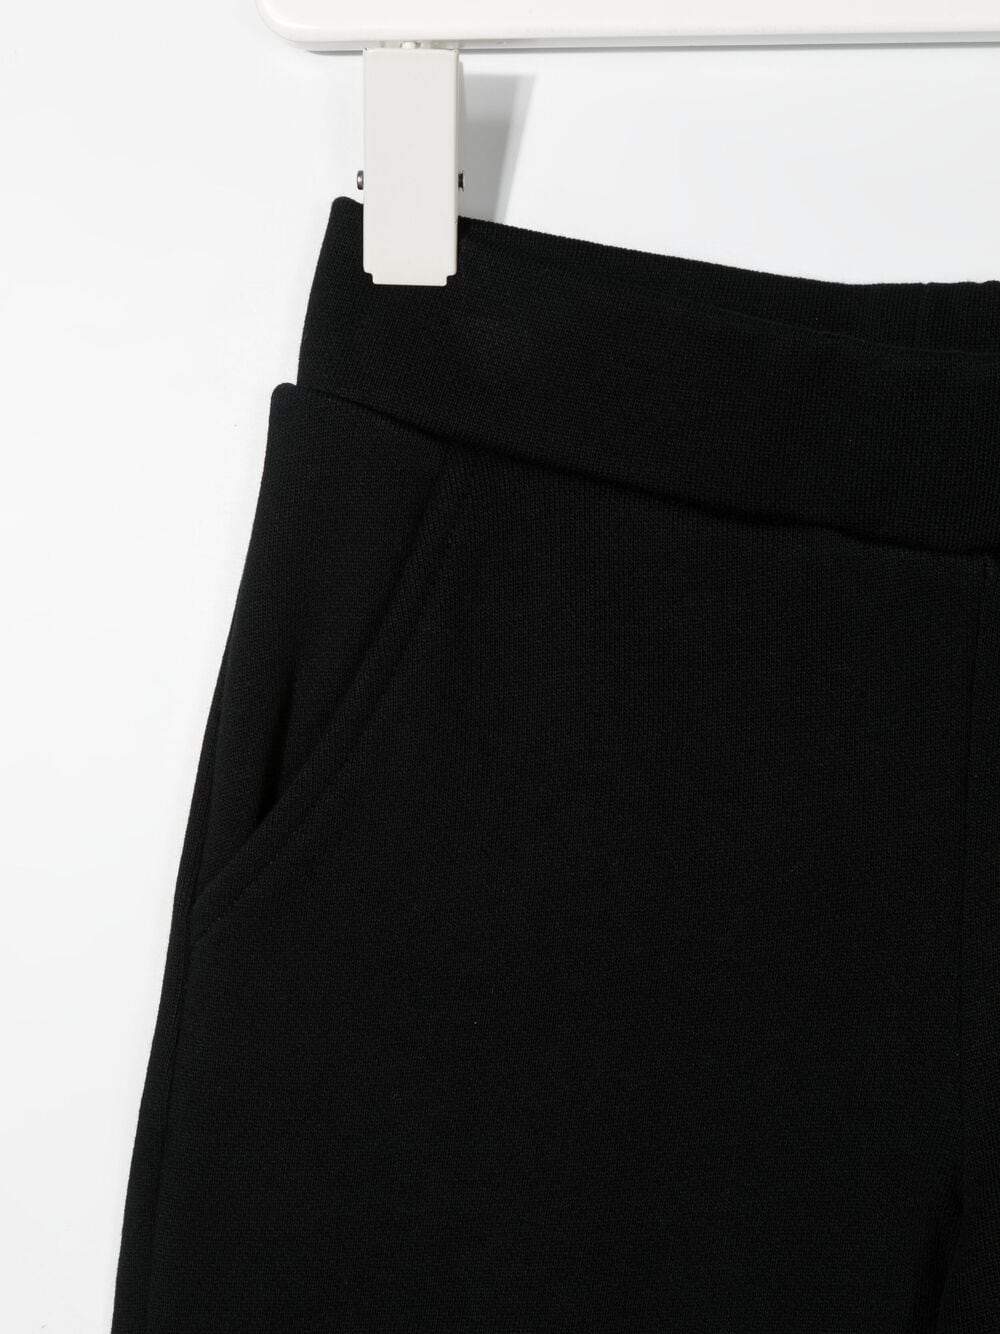 BALMAIN KIDS Logo-embroidered cotton shorts Black - MAISONDEFASHION.COM